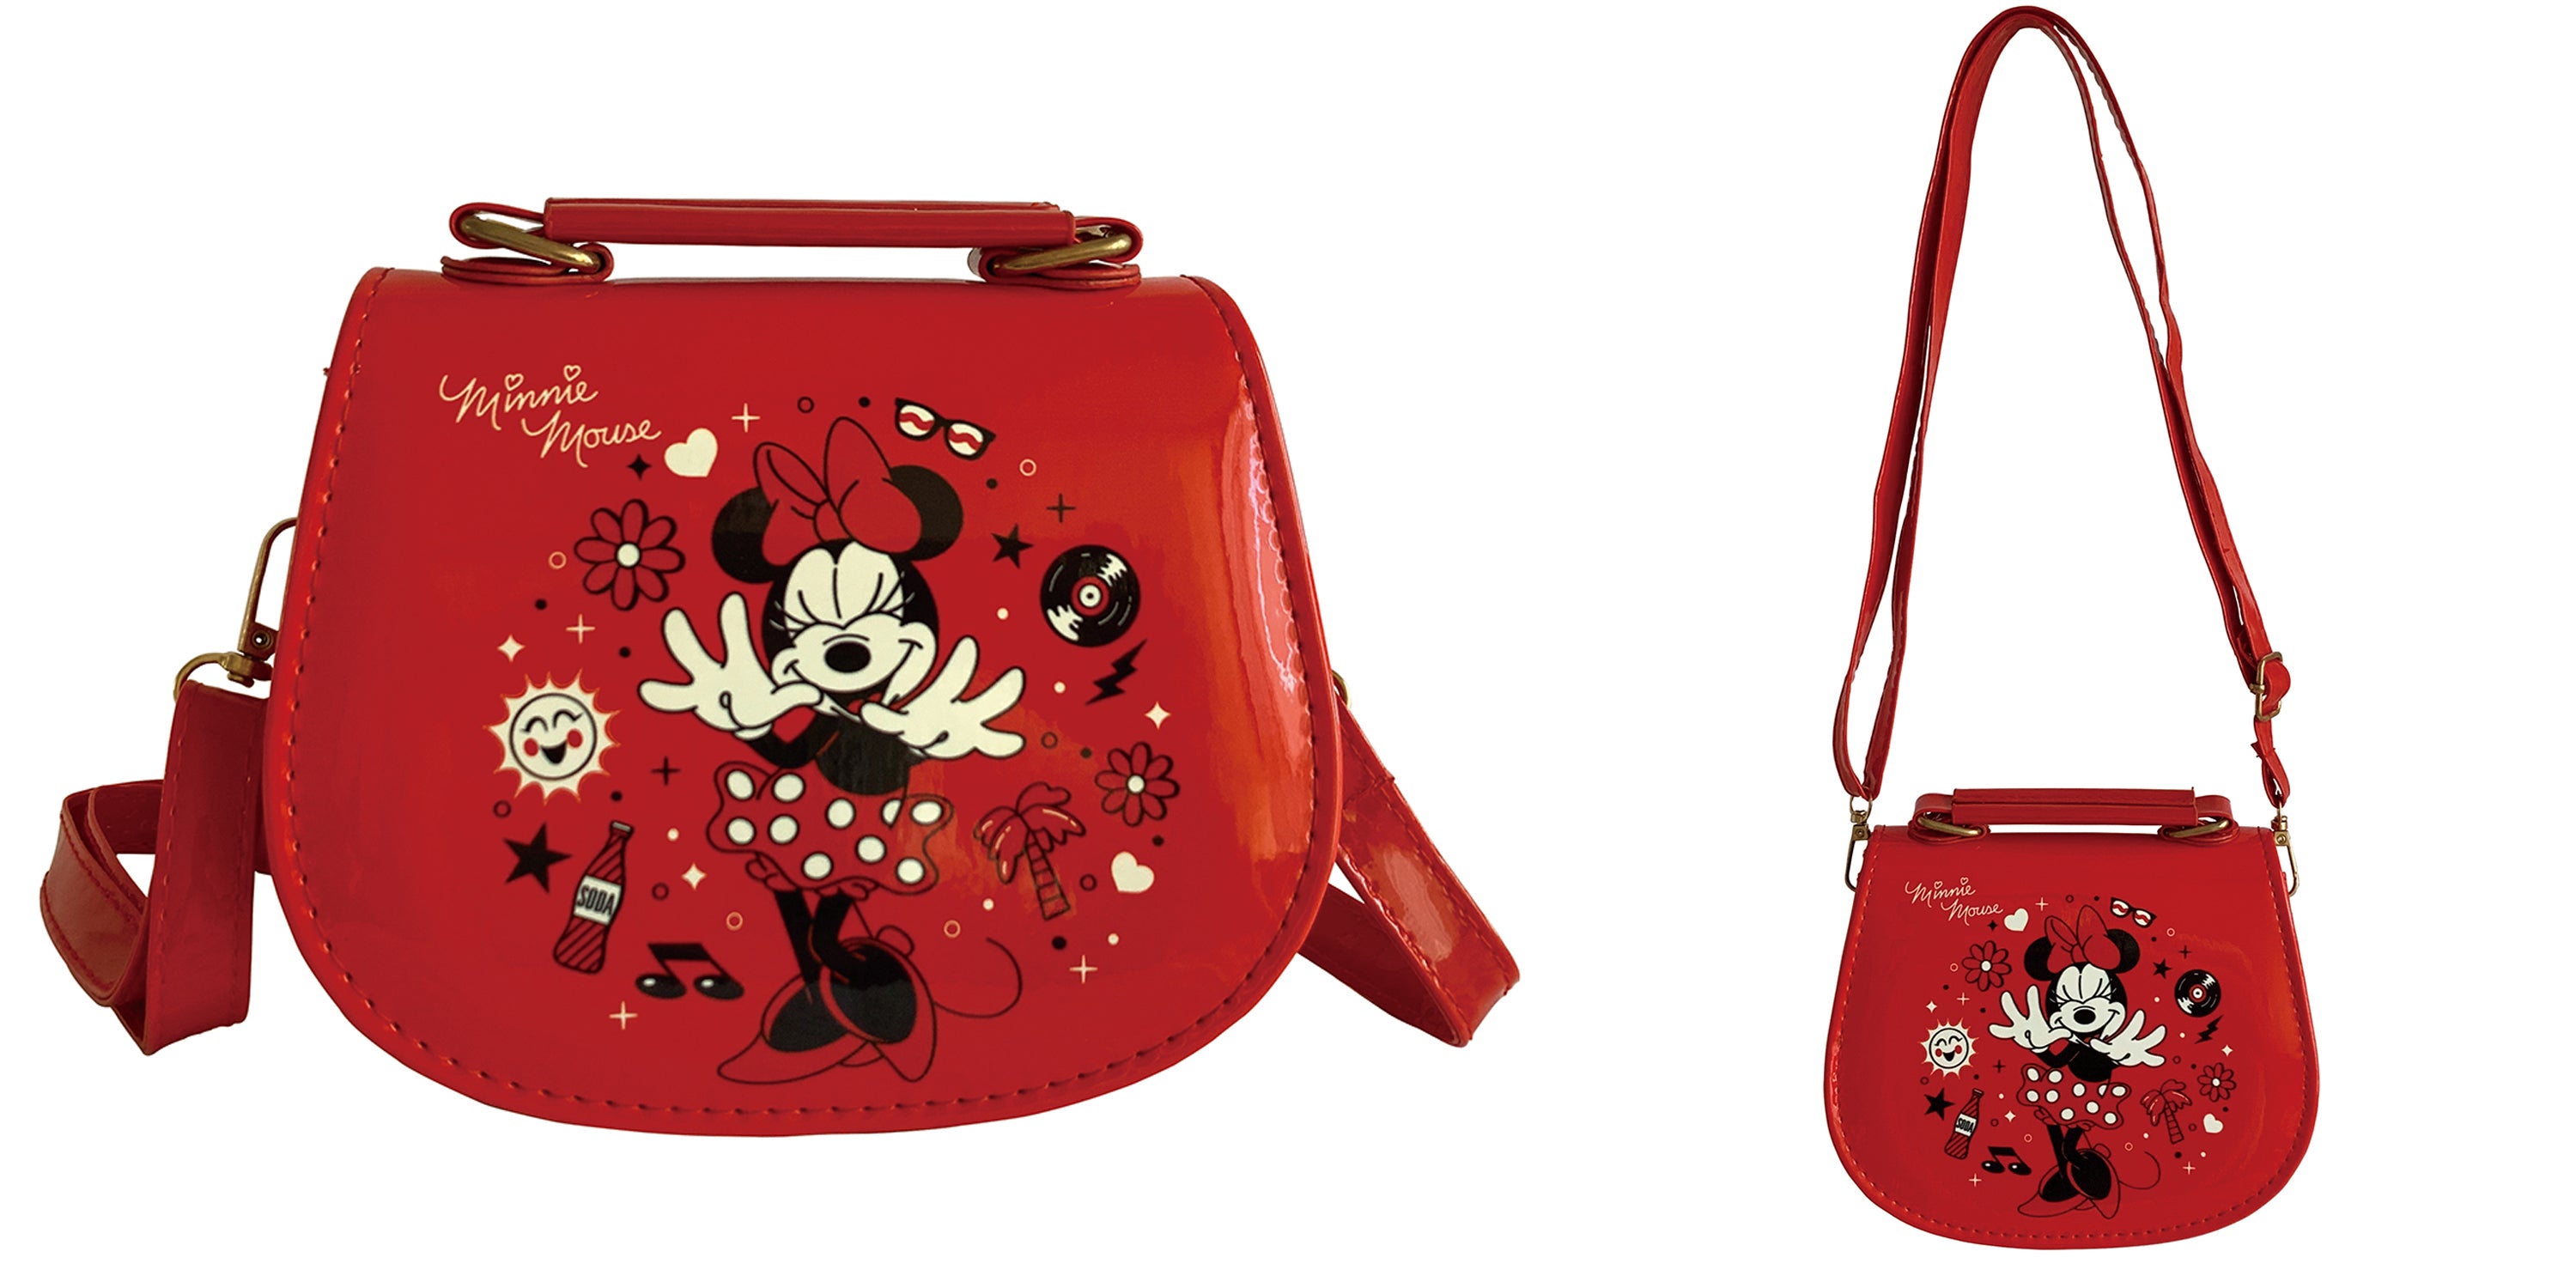 Minnie Mouse - Kids handbag DIS209 - Red